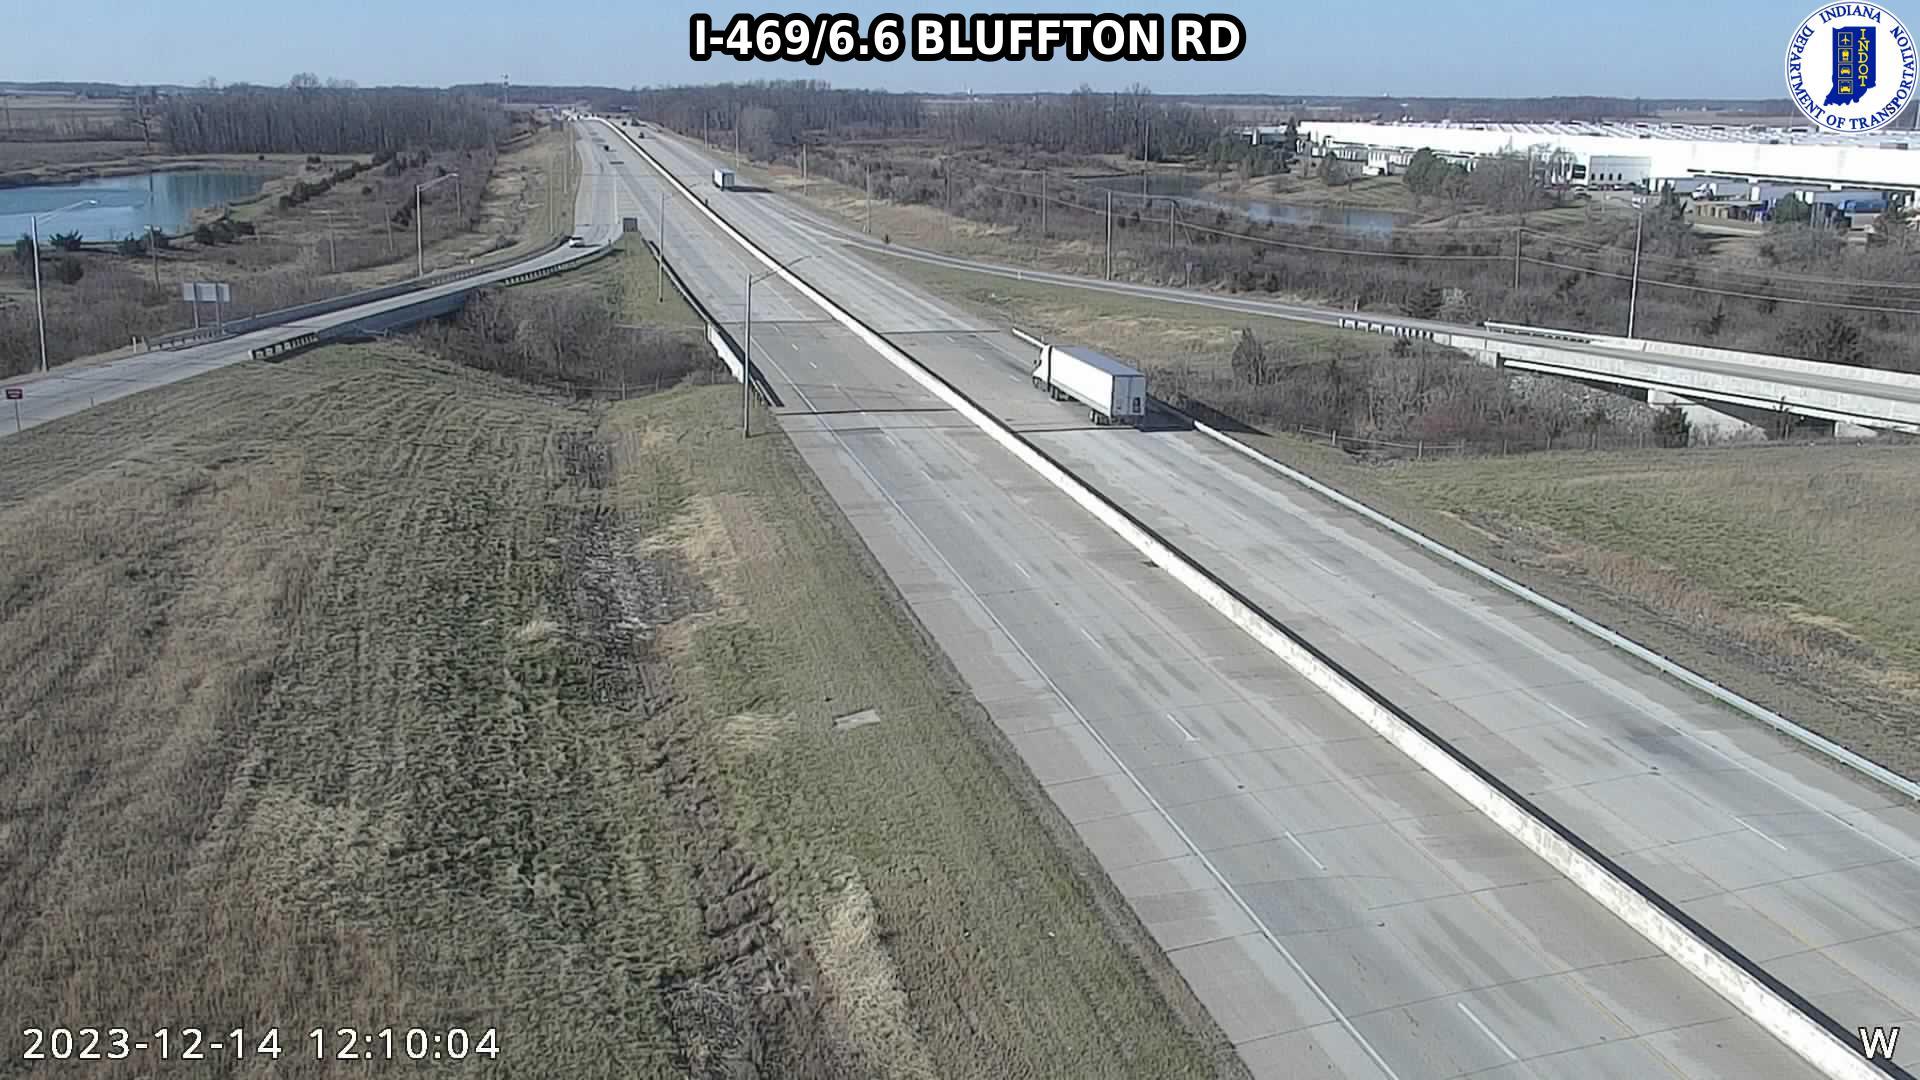 Blair: I-469: I-469/6.6 BLUFFTON RD Traffic Camera